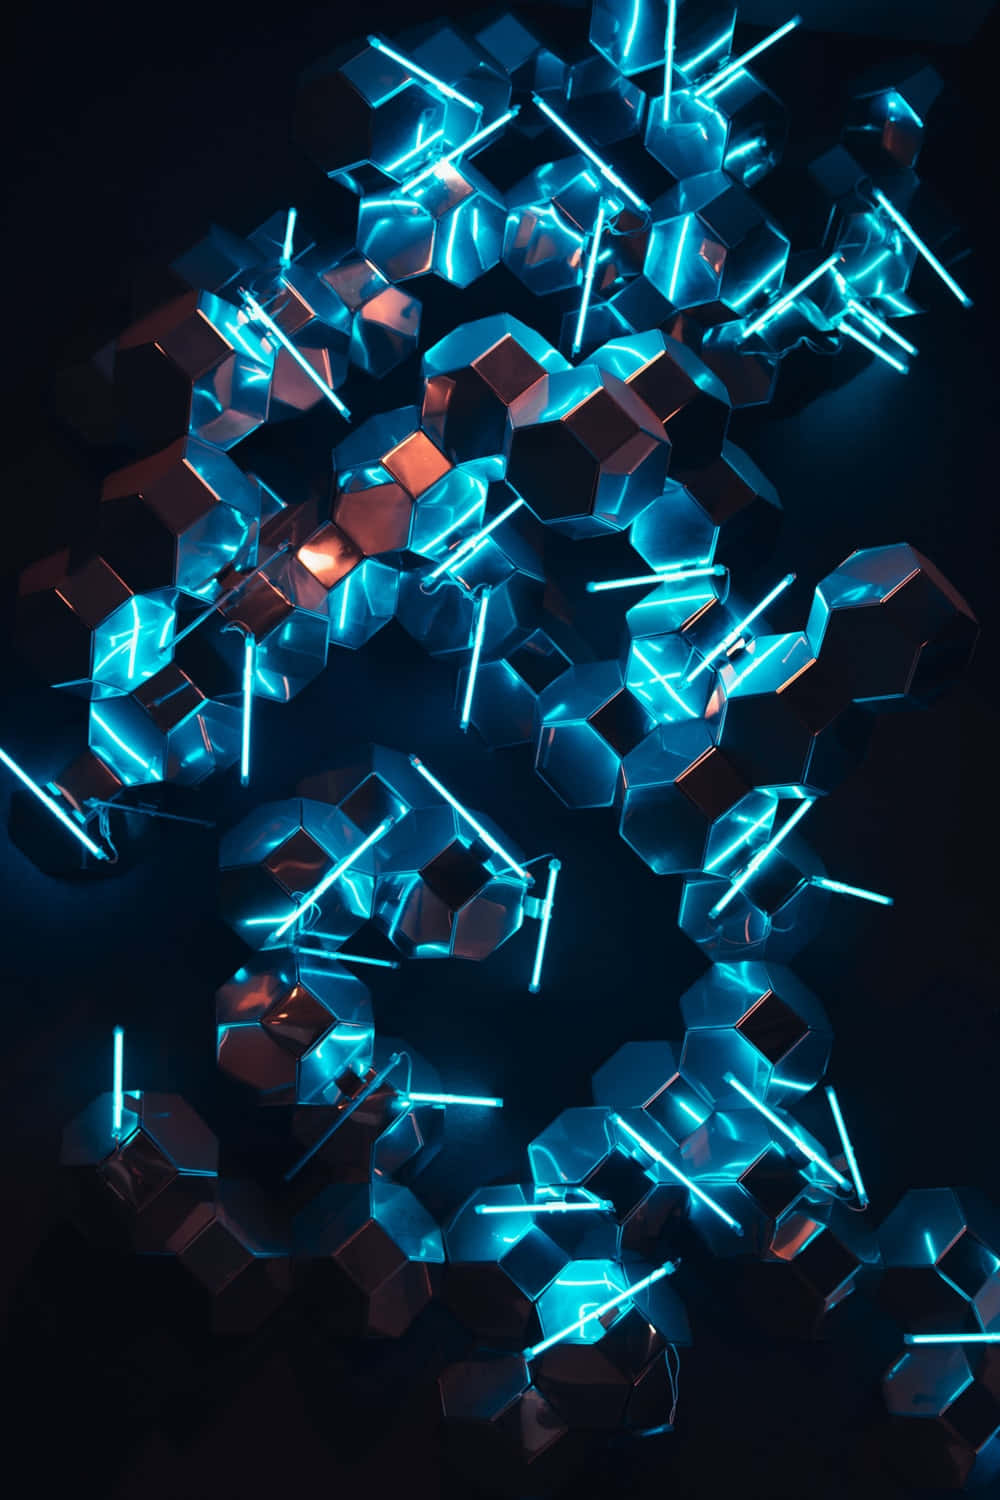 Abstract Neon Crystals Digital Art Wallpaper